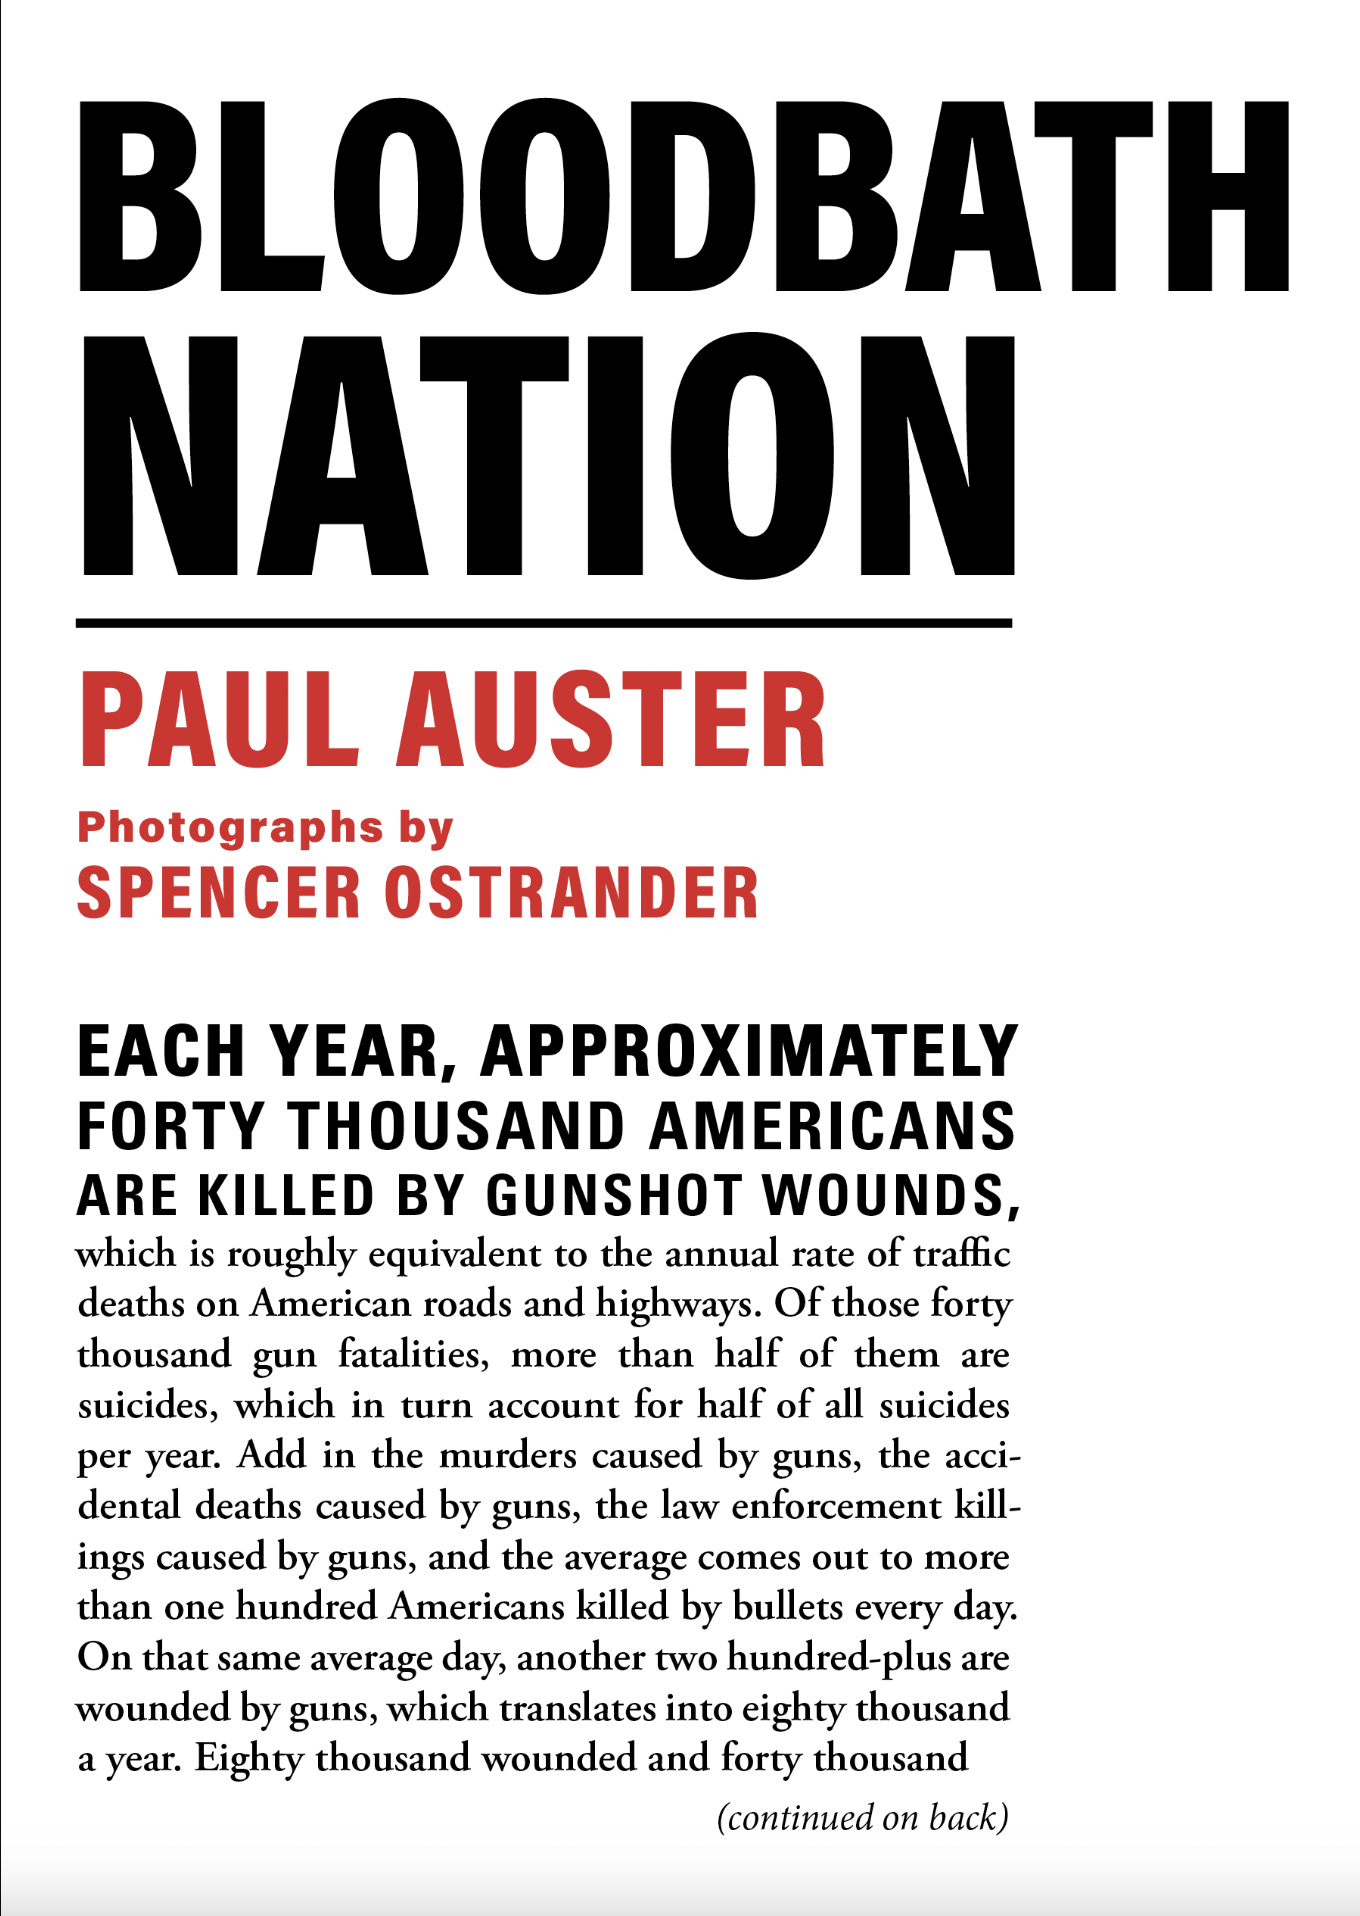 Bloodbath Nation,  Paul Auster & Spencer Ostrander,  Grove Press, 2022